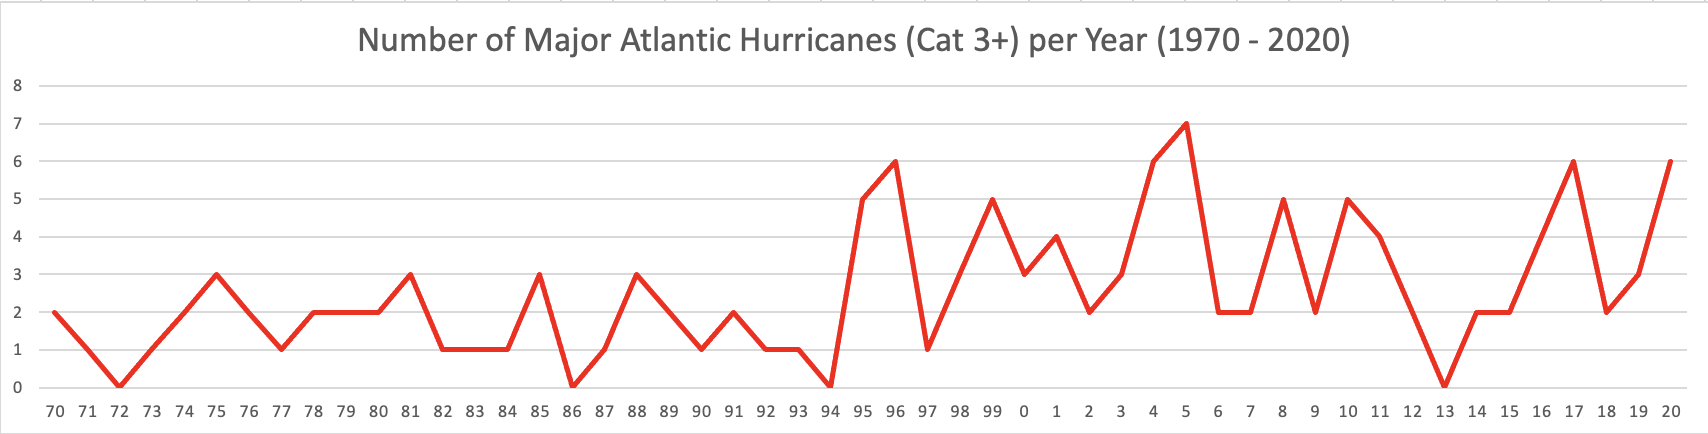 Atlantic Hurricanes (Cat 3+) per year 1970-2020